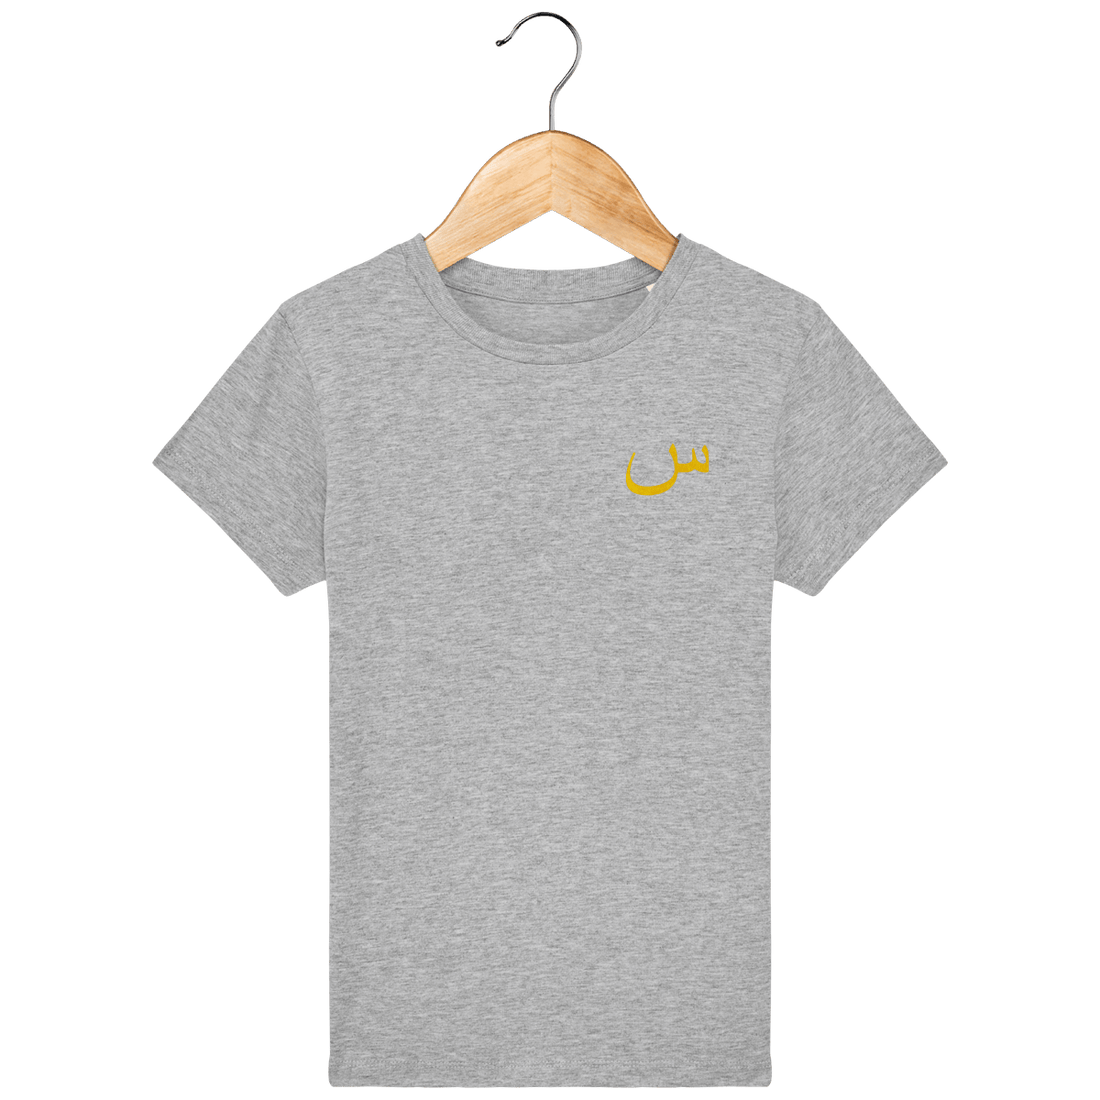 Enfant & Bébé>Tee-shirts - T-Shirt Enfant Lettre Arabe Siin